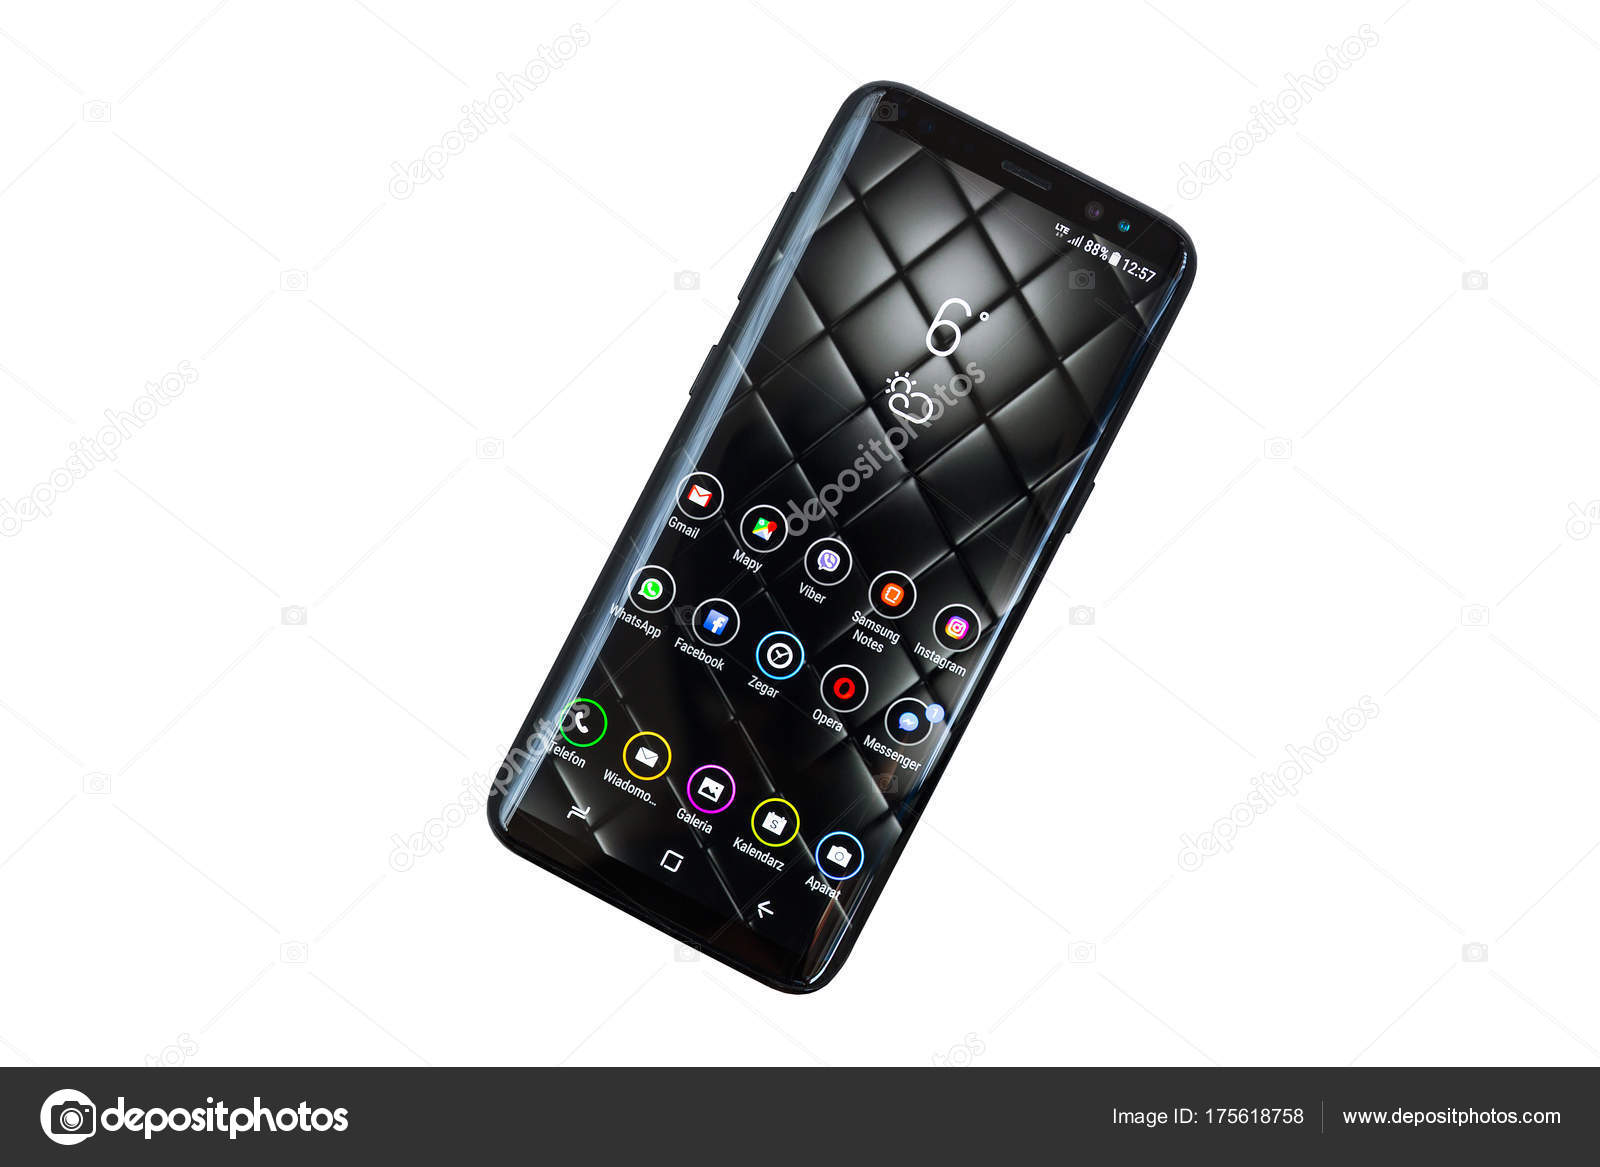 Download 880 Background Black Samsung Gratis Terbaik